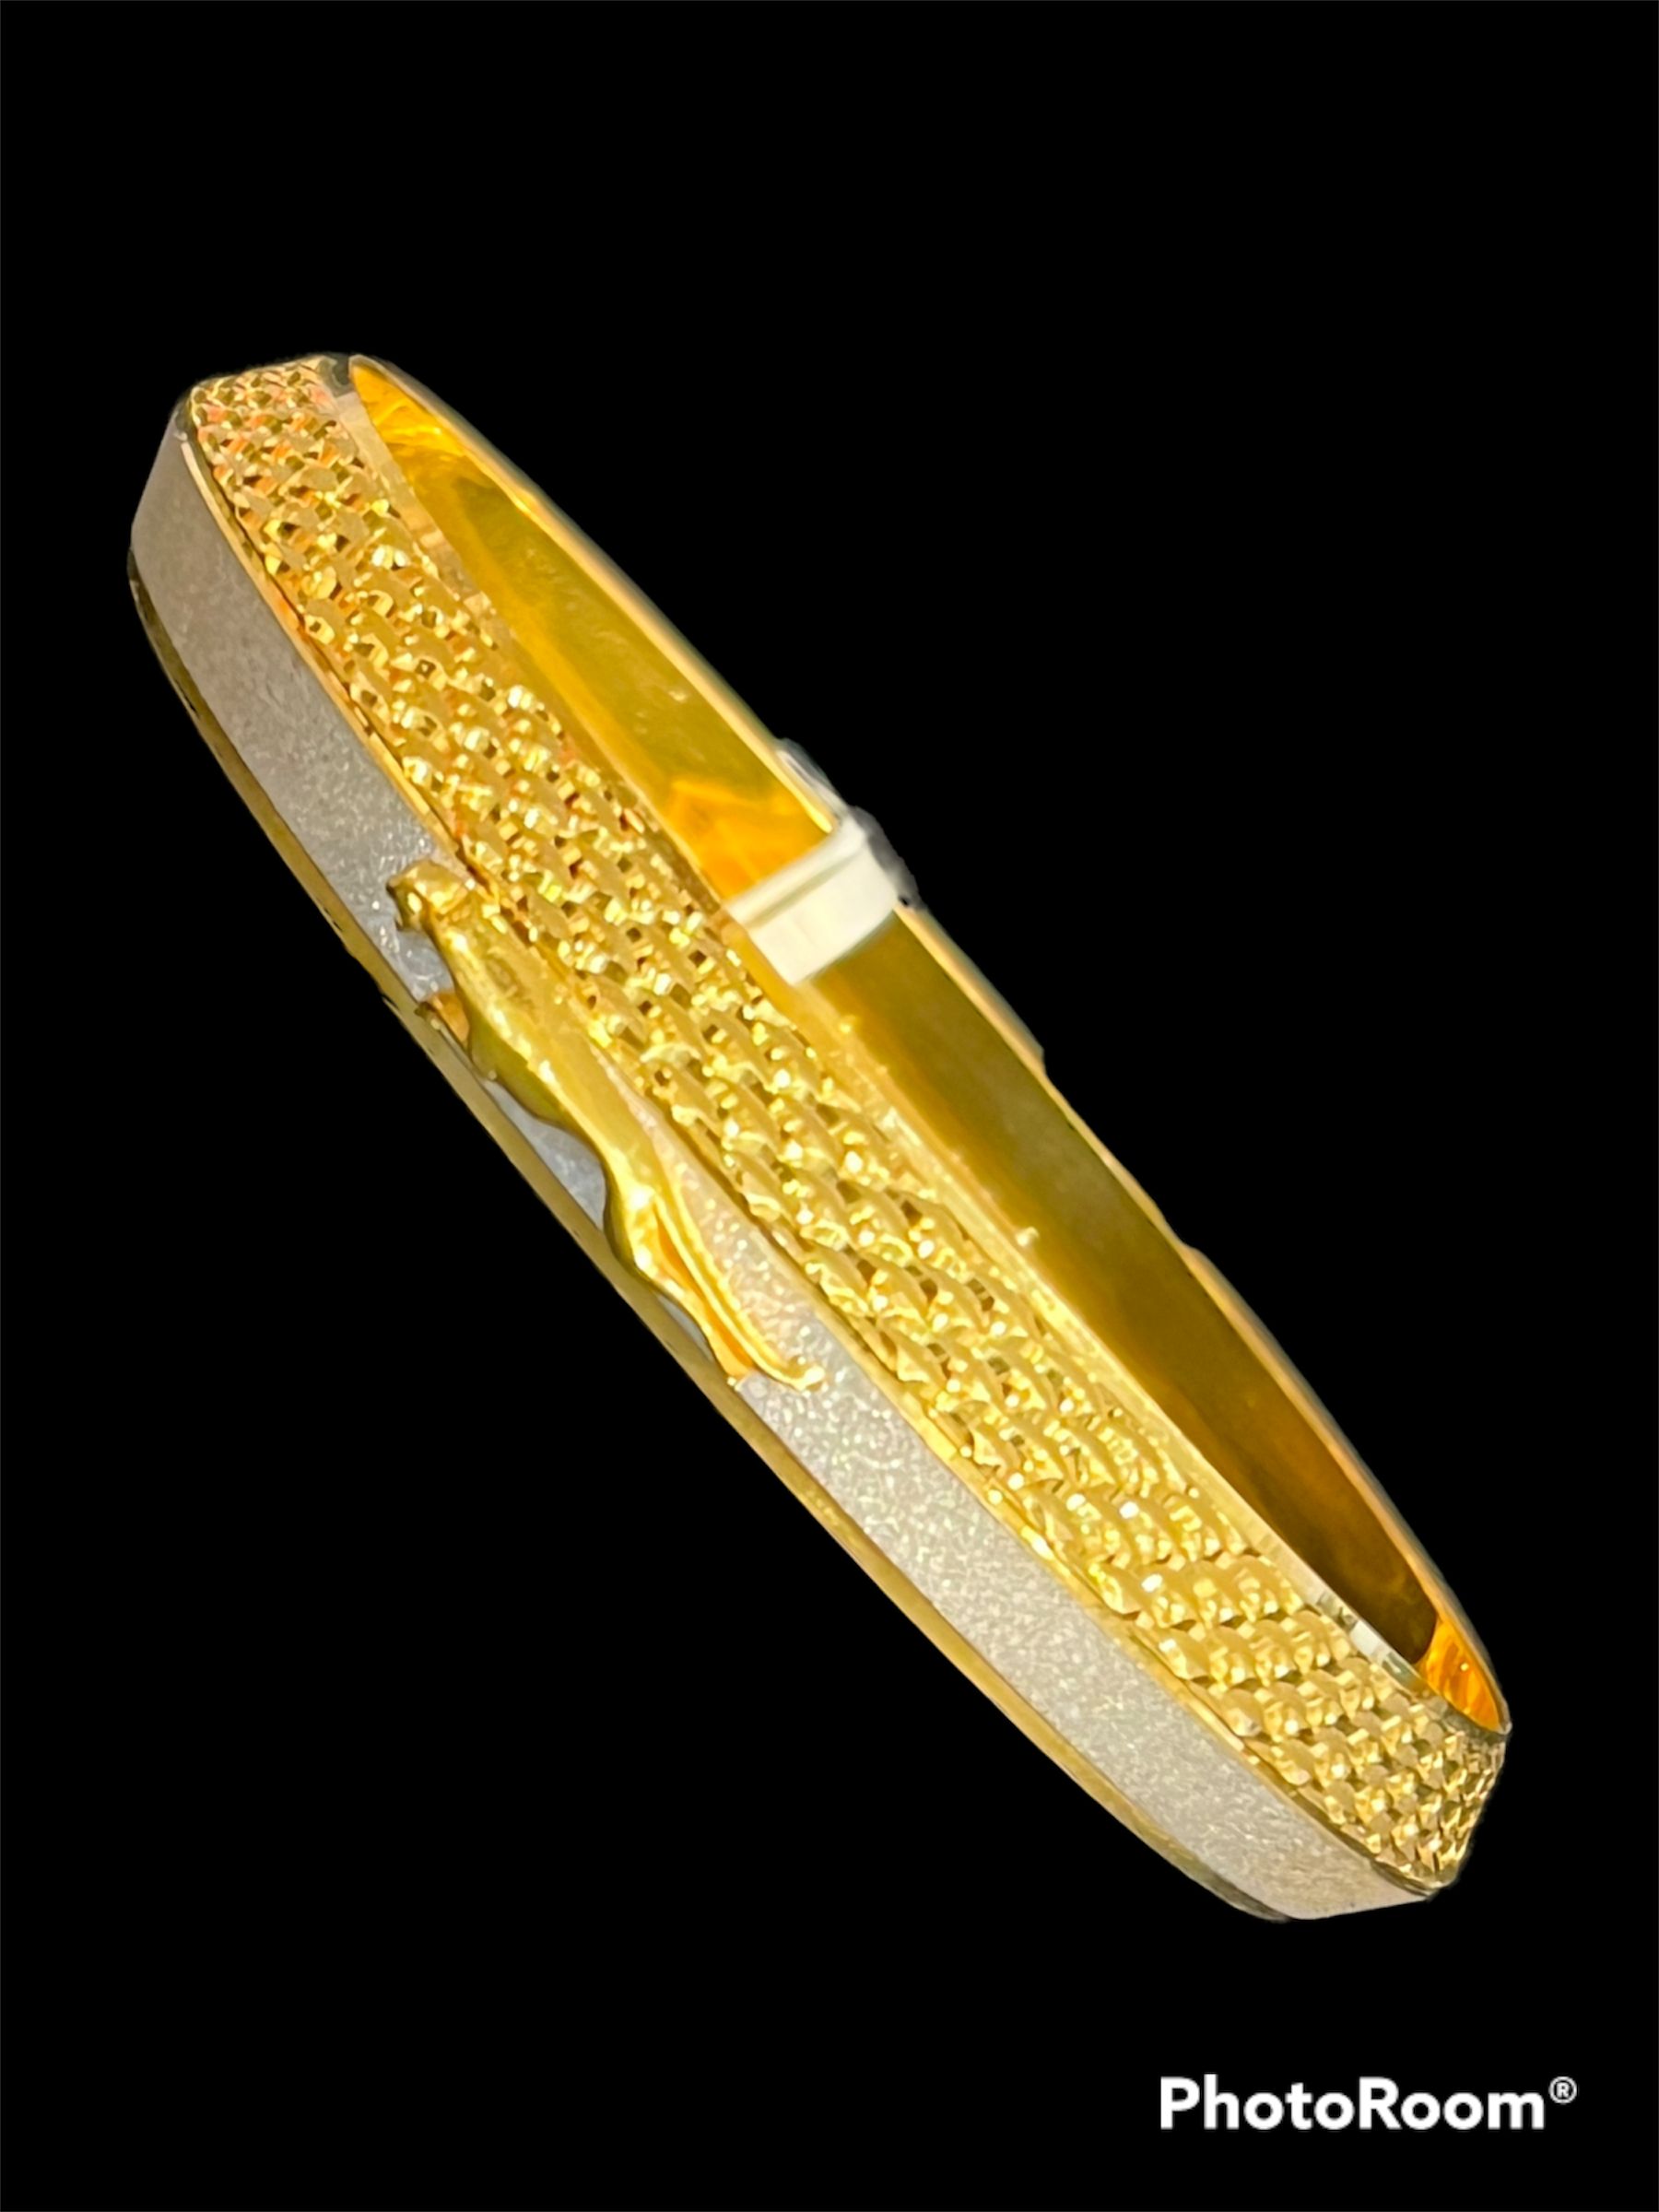 Rose Gold Jaguar Silver Bracelet – Boldiful